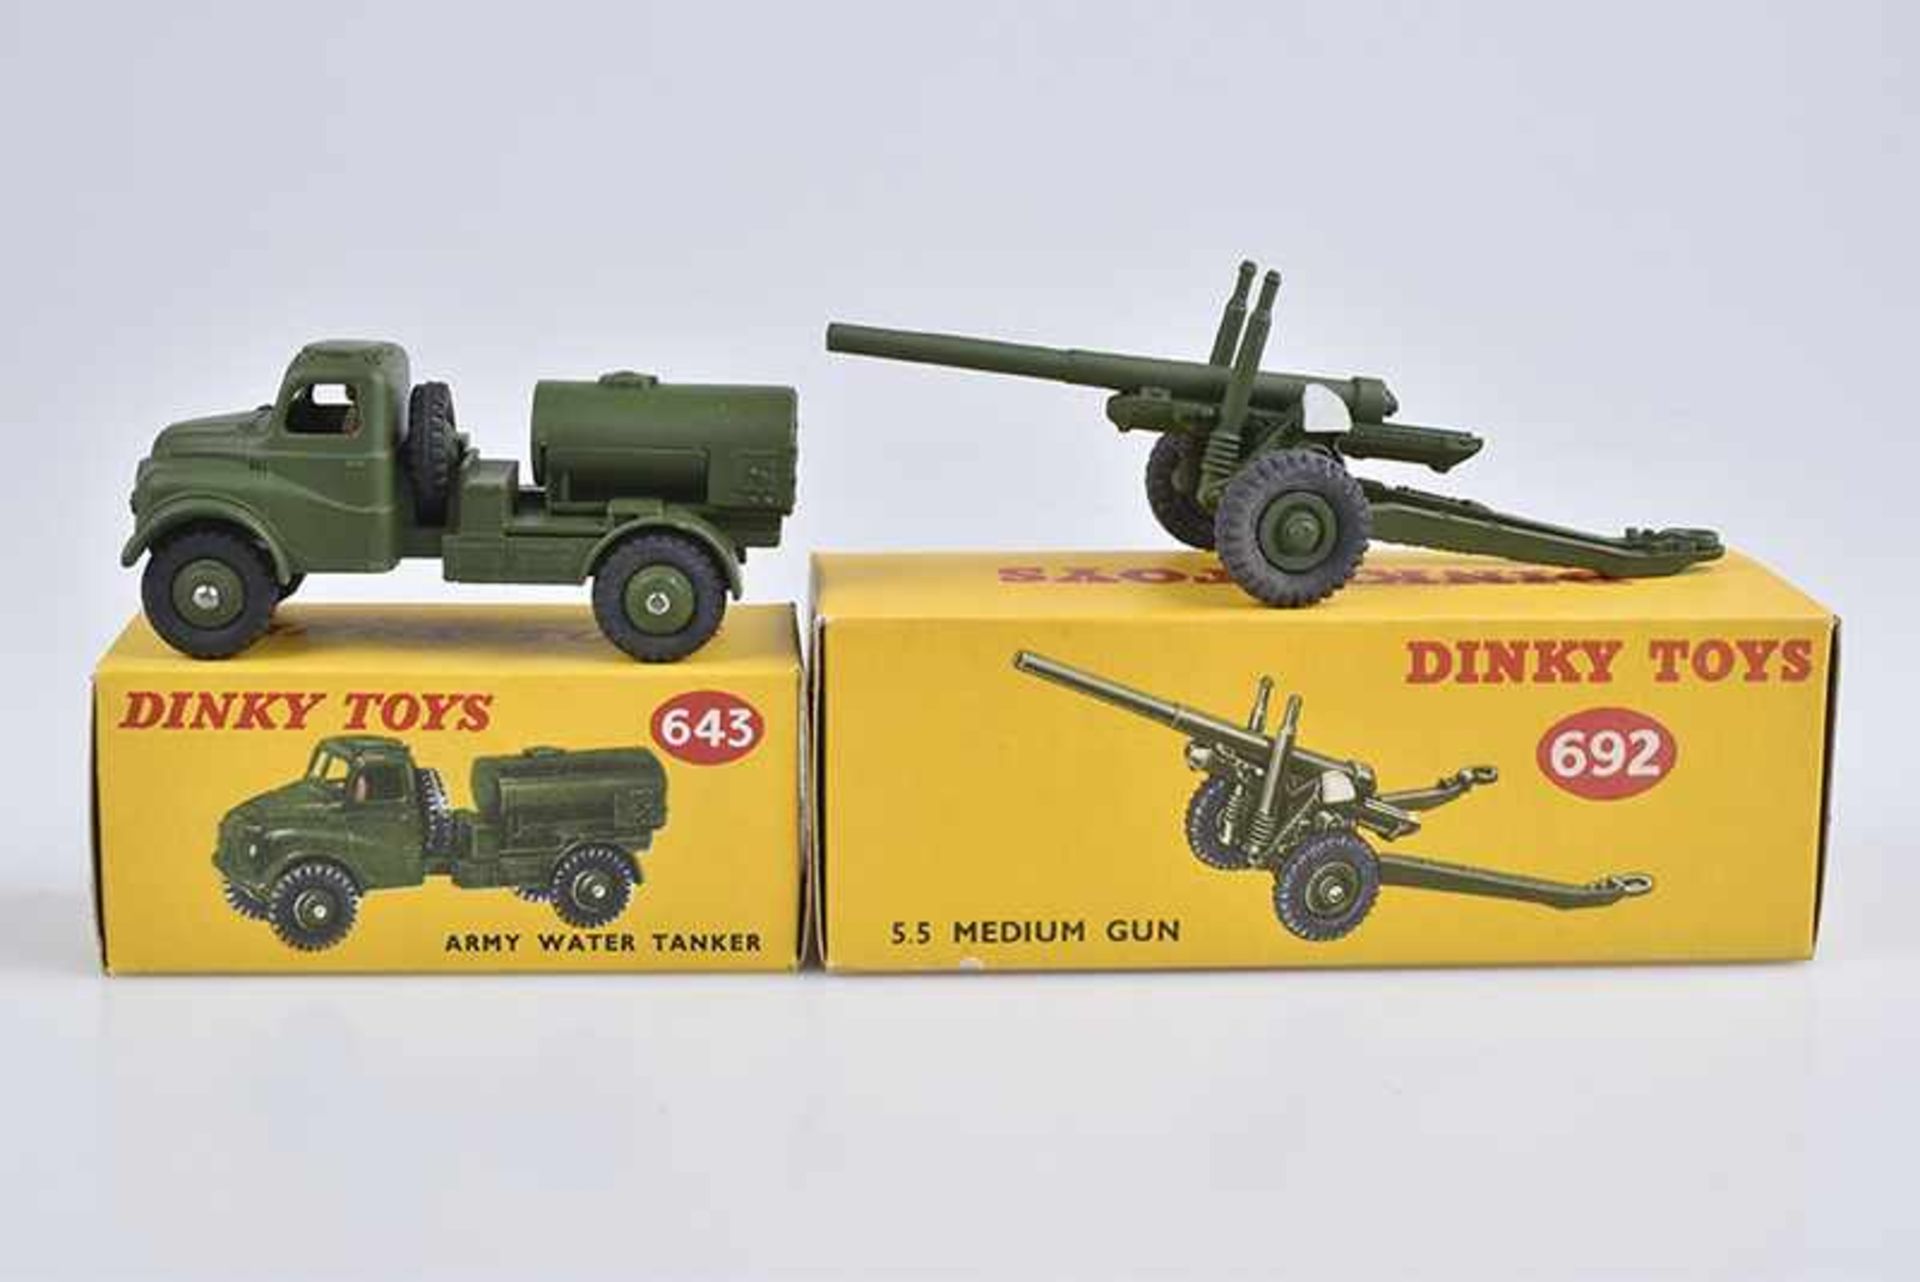 DINKY TOYS 2 Militärfahrzeuge, Made in England, Metall, M 1:43, 50er Jahre, Army Water Tanker, Nr.